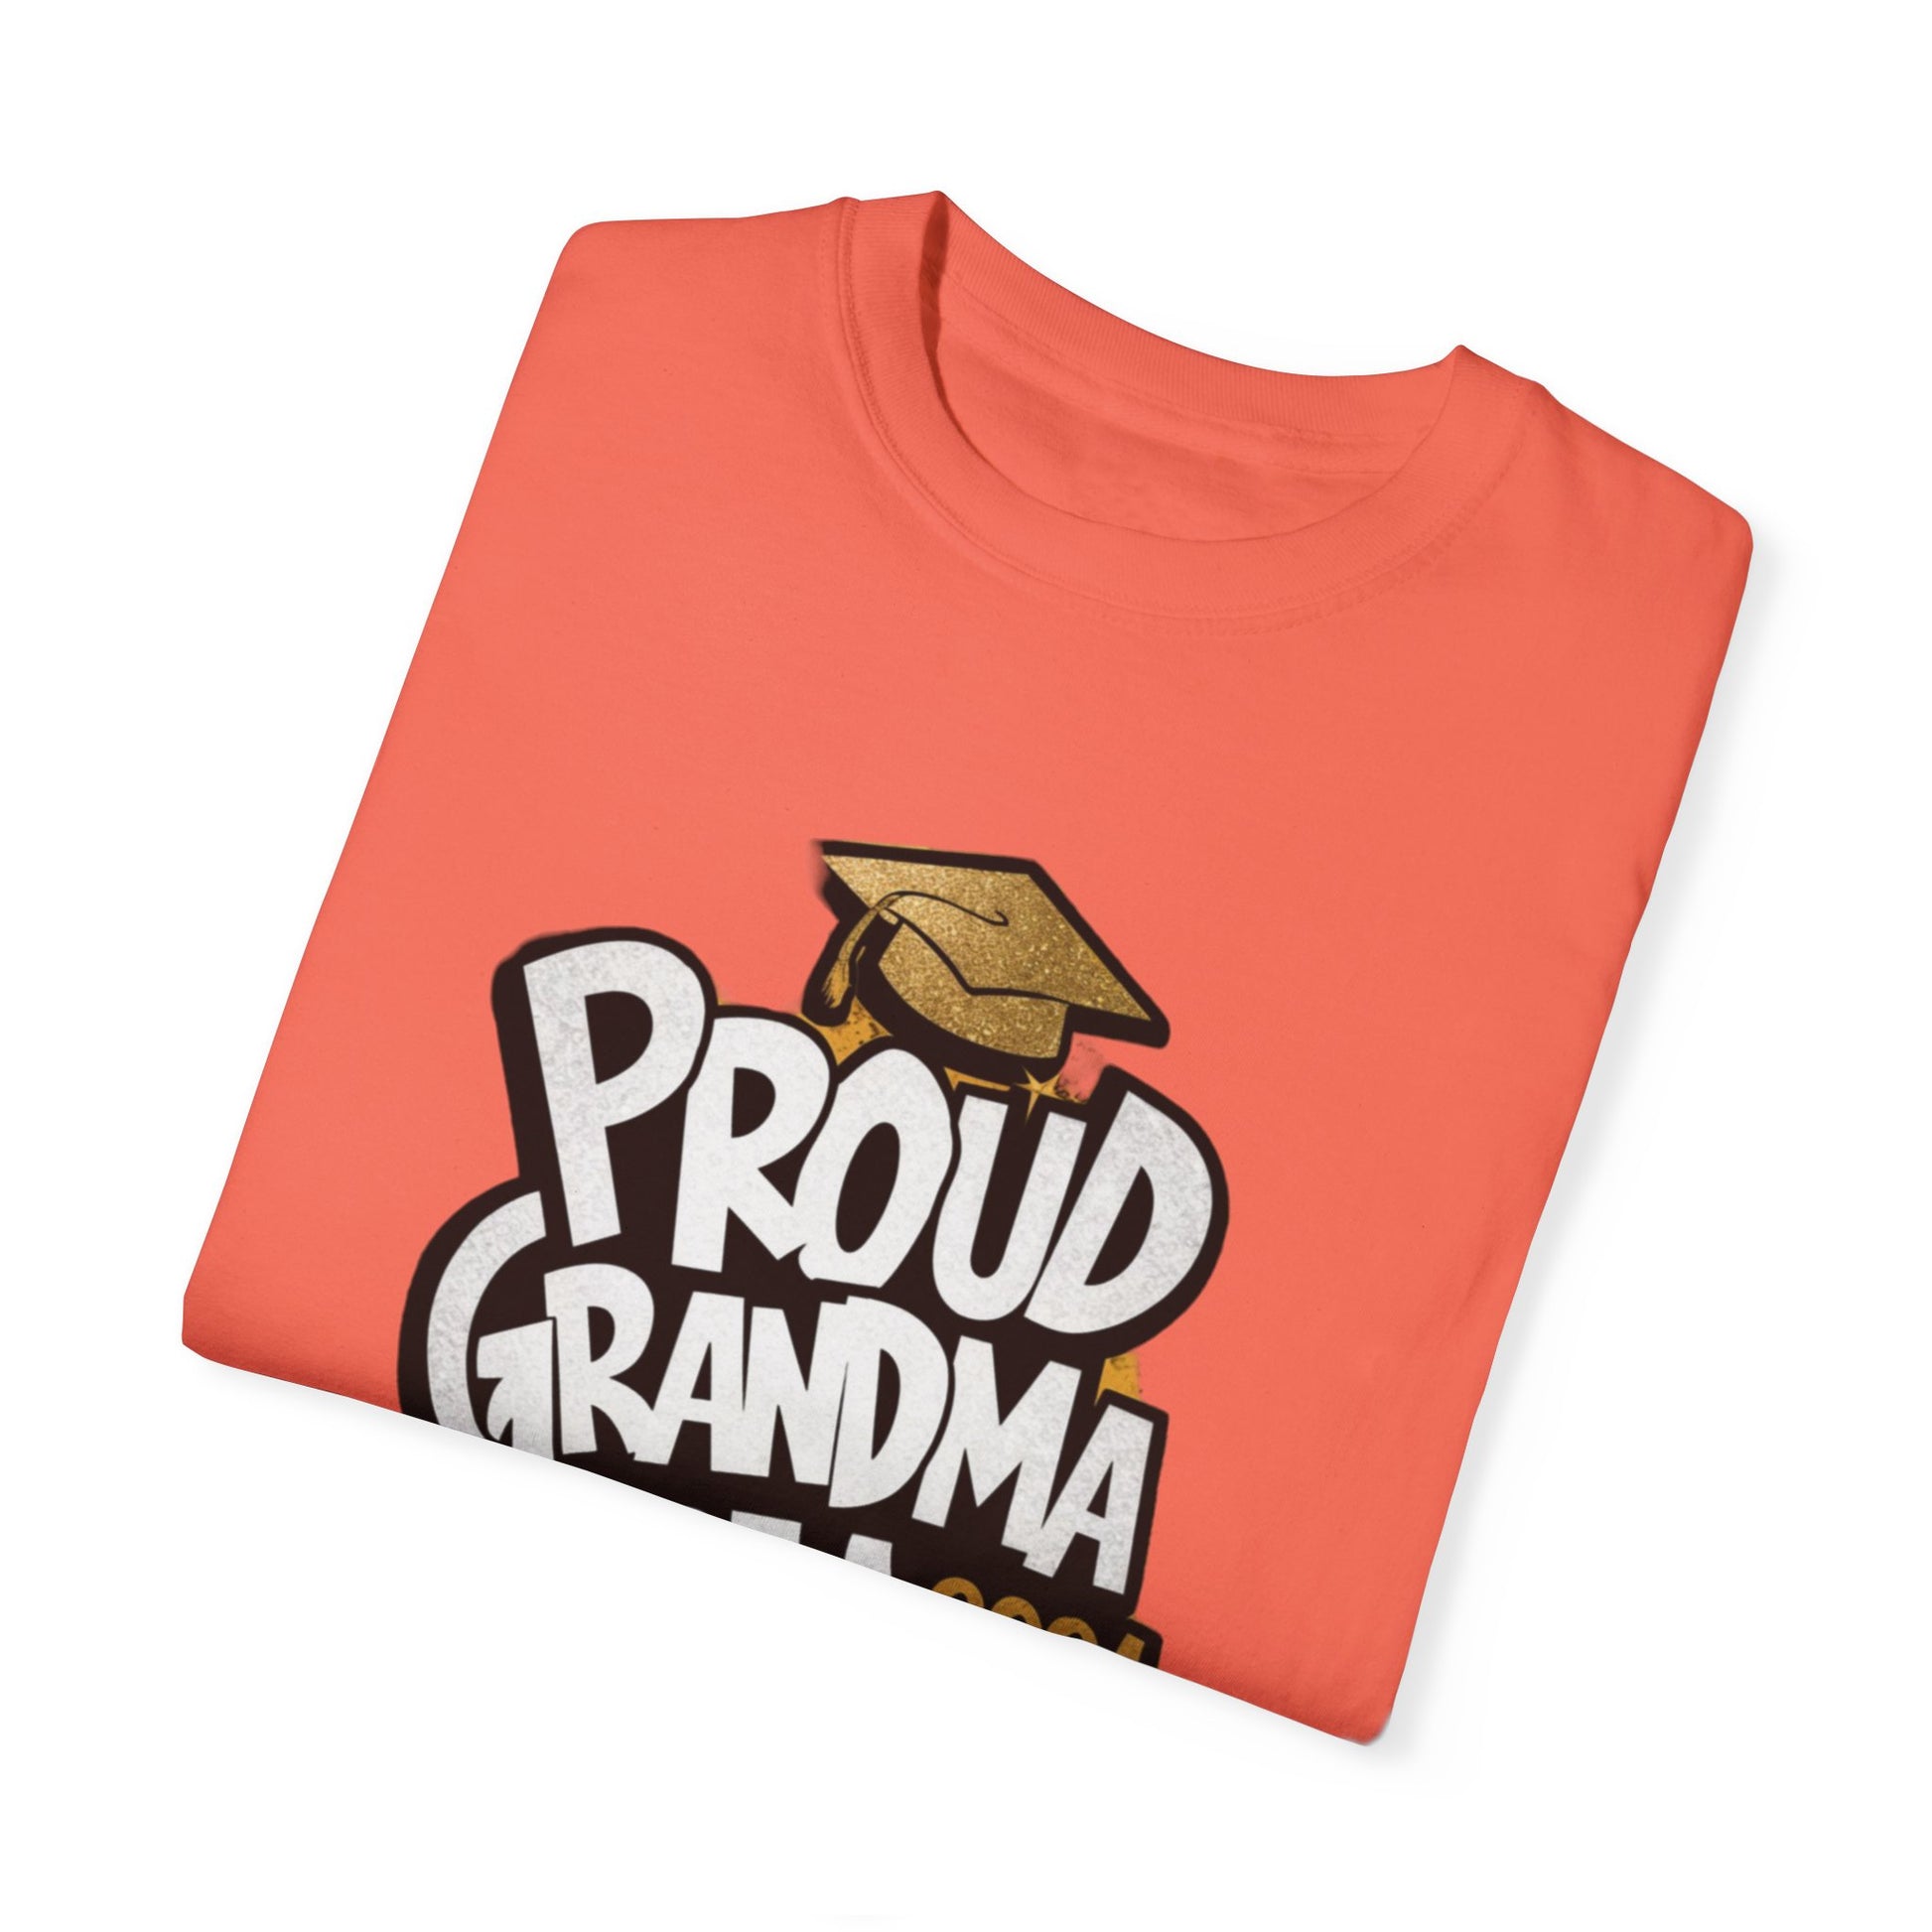 Proud of Grandma 2024 Graduate Unisex Garment-dyed T-shirt Cotton Funny Humorous Graphic Soft Premium Unisex Men Women Bright Salmon T-shirt Birthday Gift-32